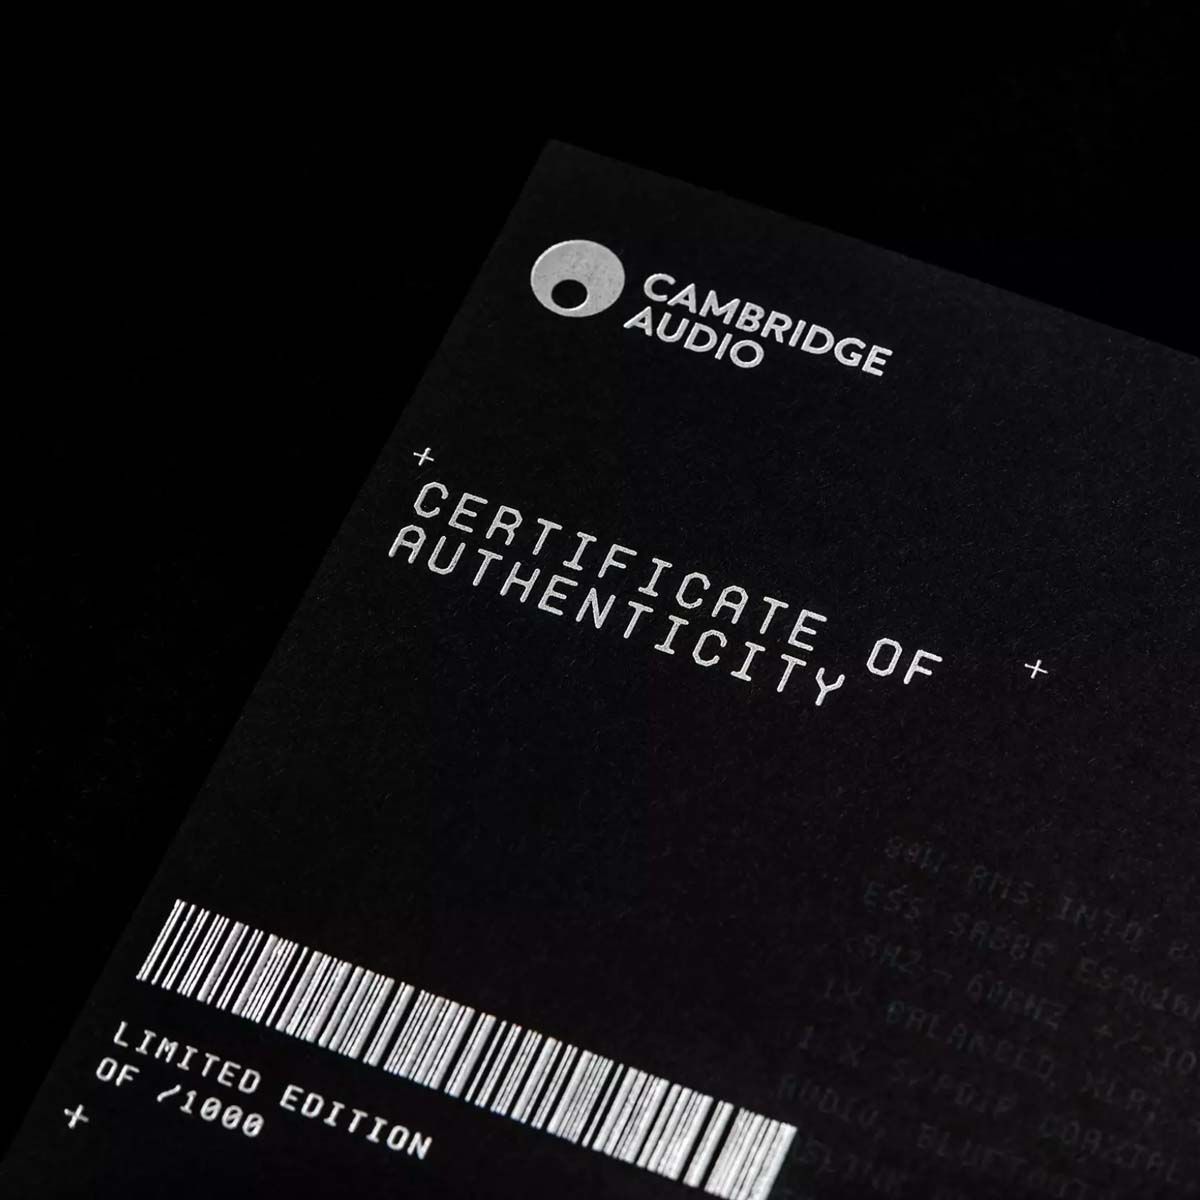 Cambridge Audio CXA81 Integrated Amplifier - Black Edition close-up of certificate of authenticity